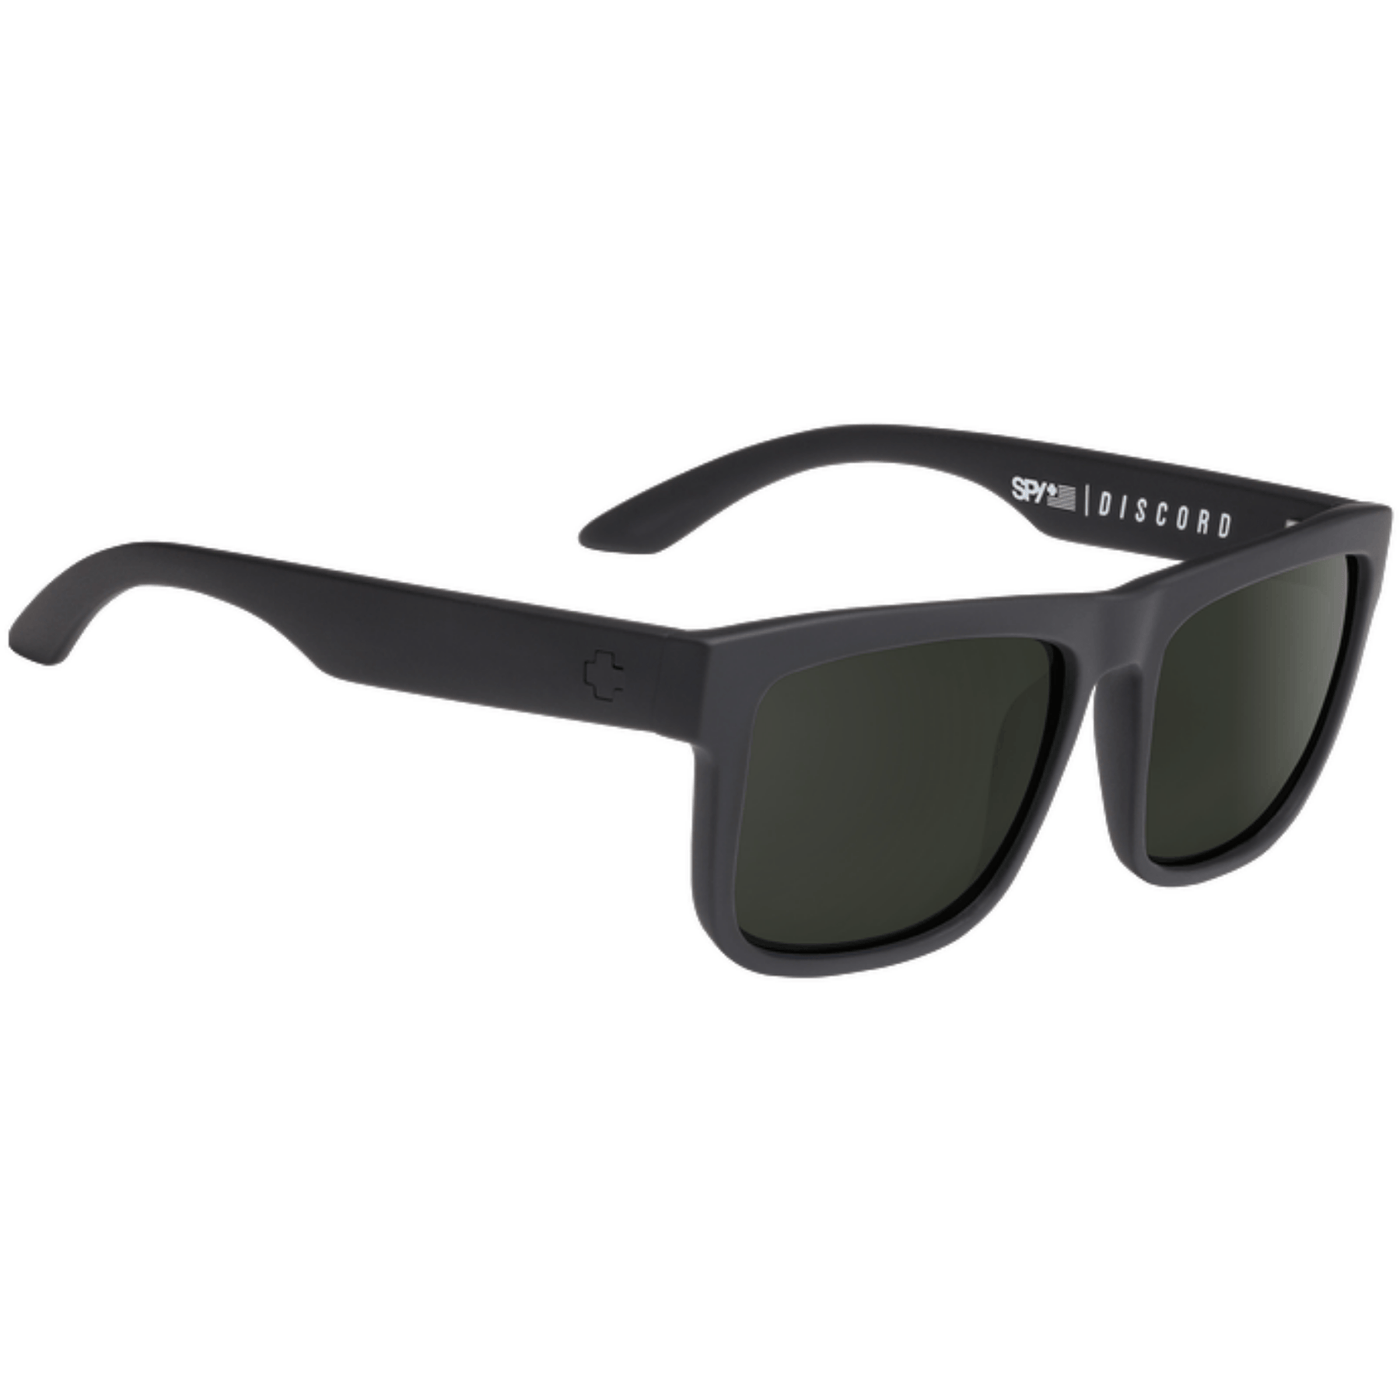 SOSI sunglasses - black